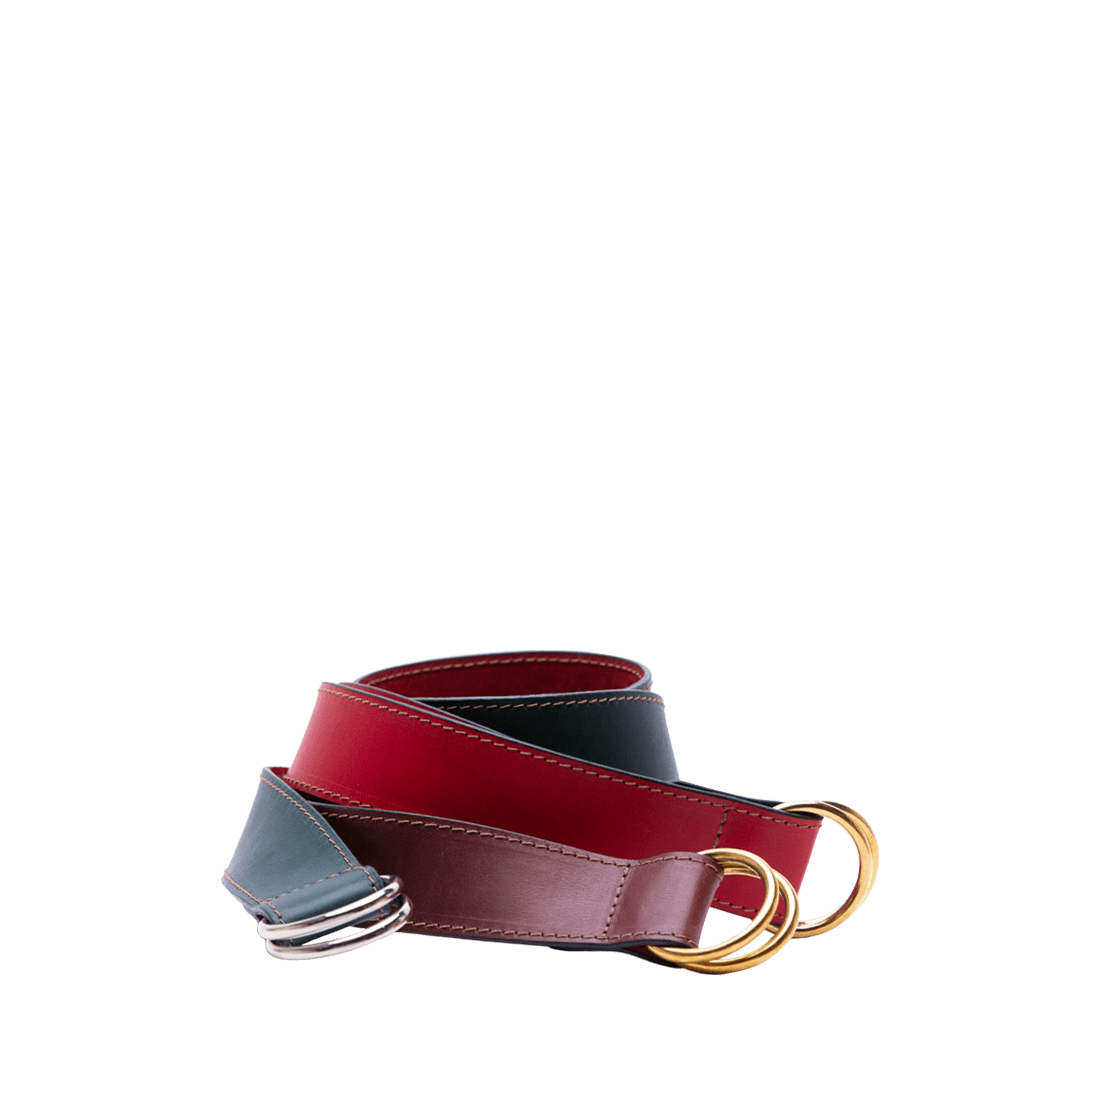 Women's leather belts in Italian and Spanish soft hide, handmade by Mackenzie Leather Edinburgh.